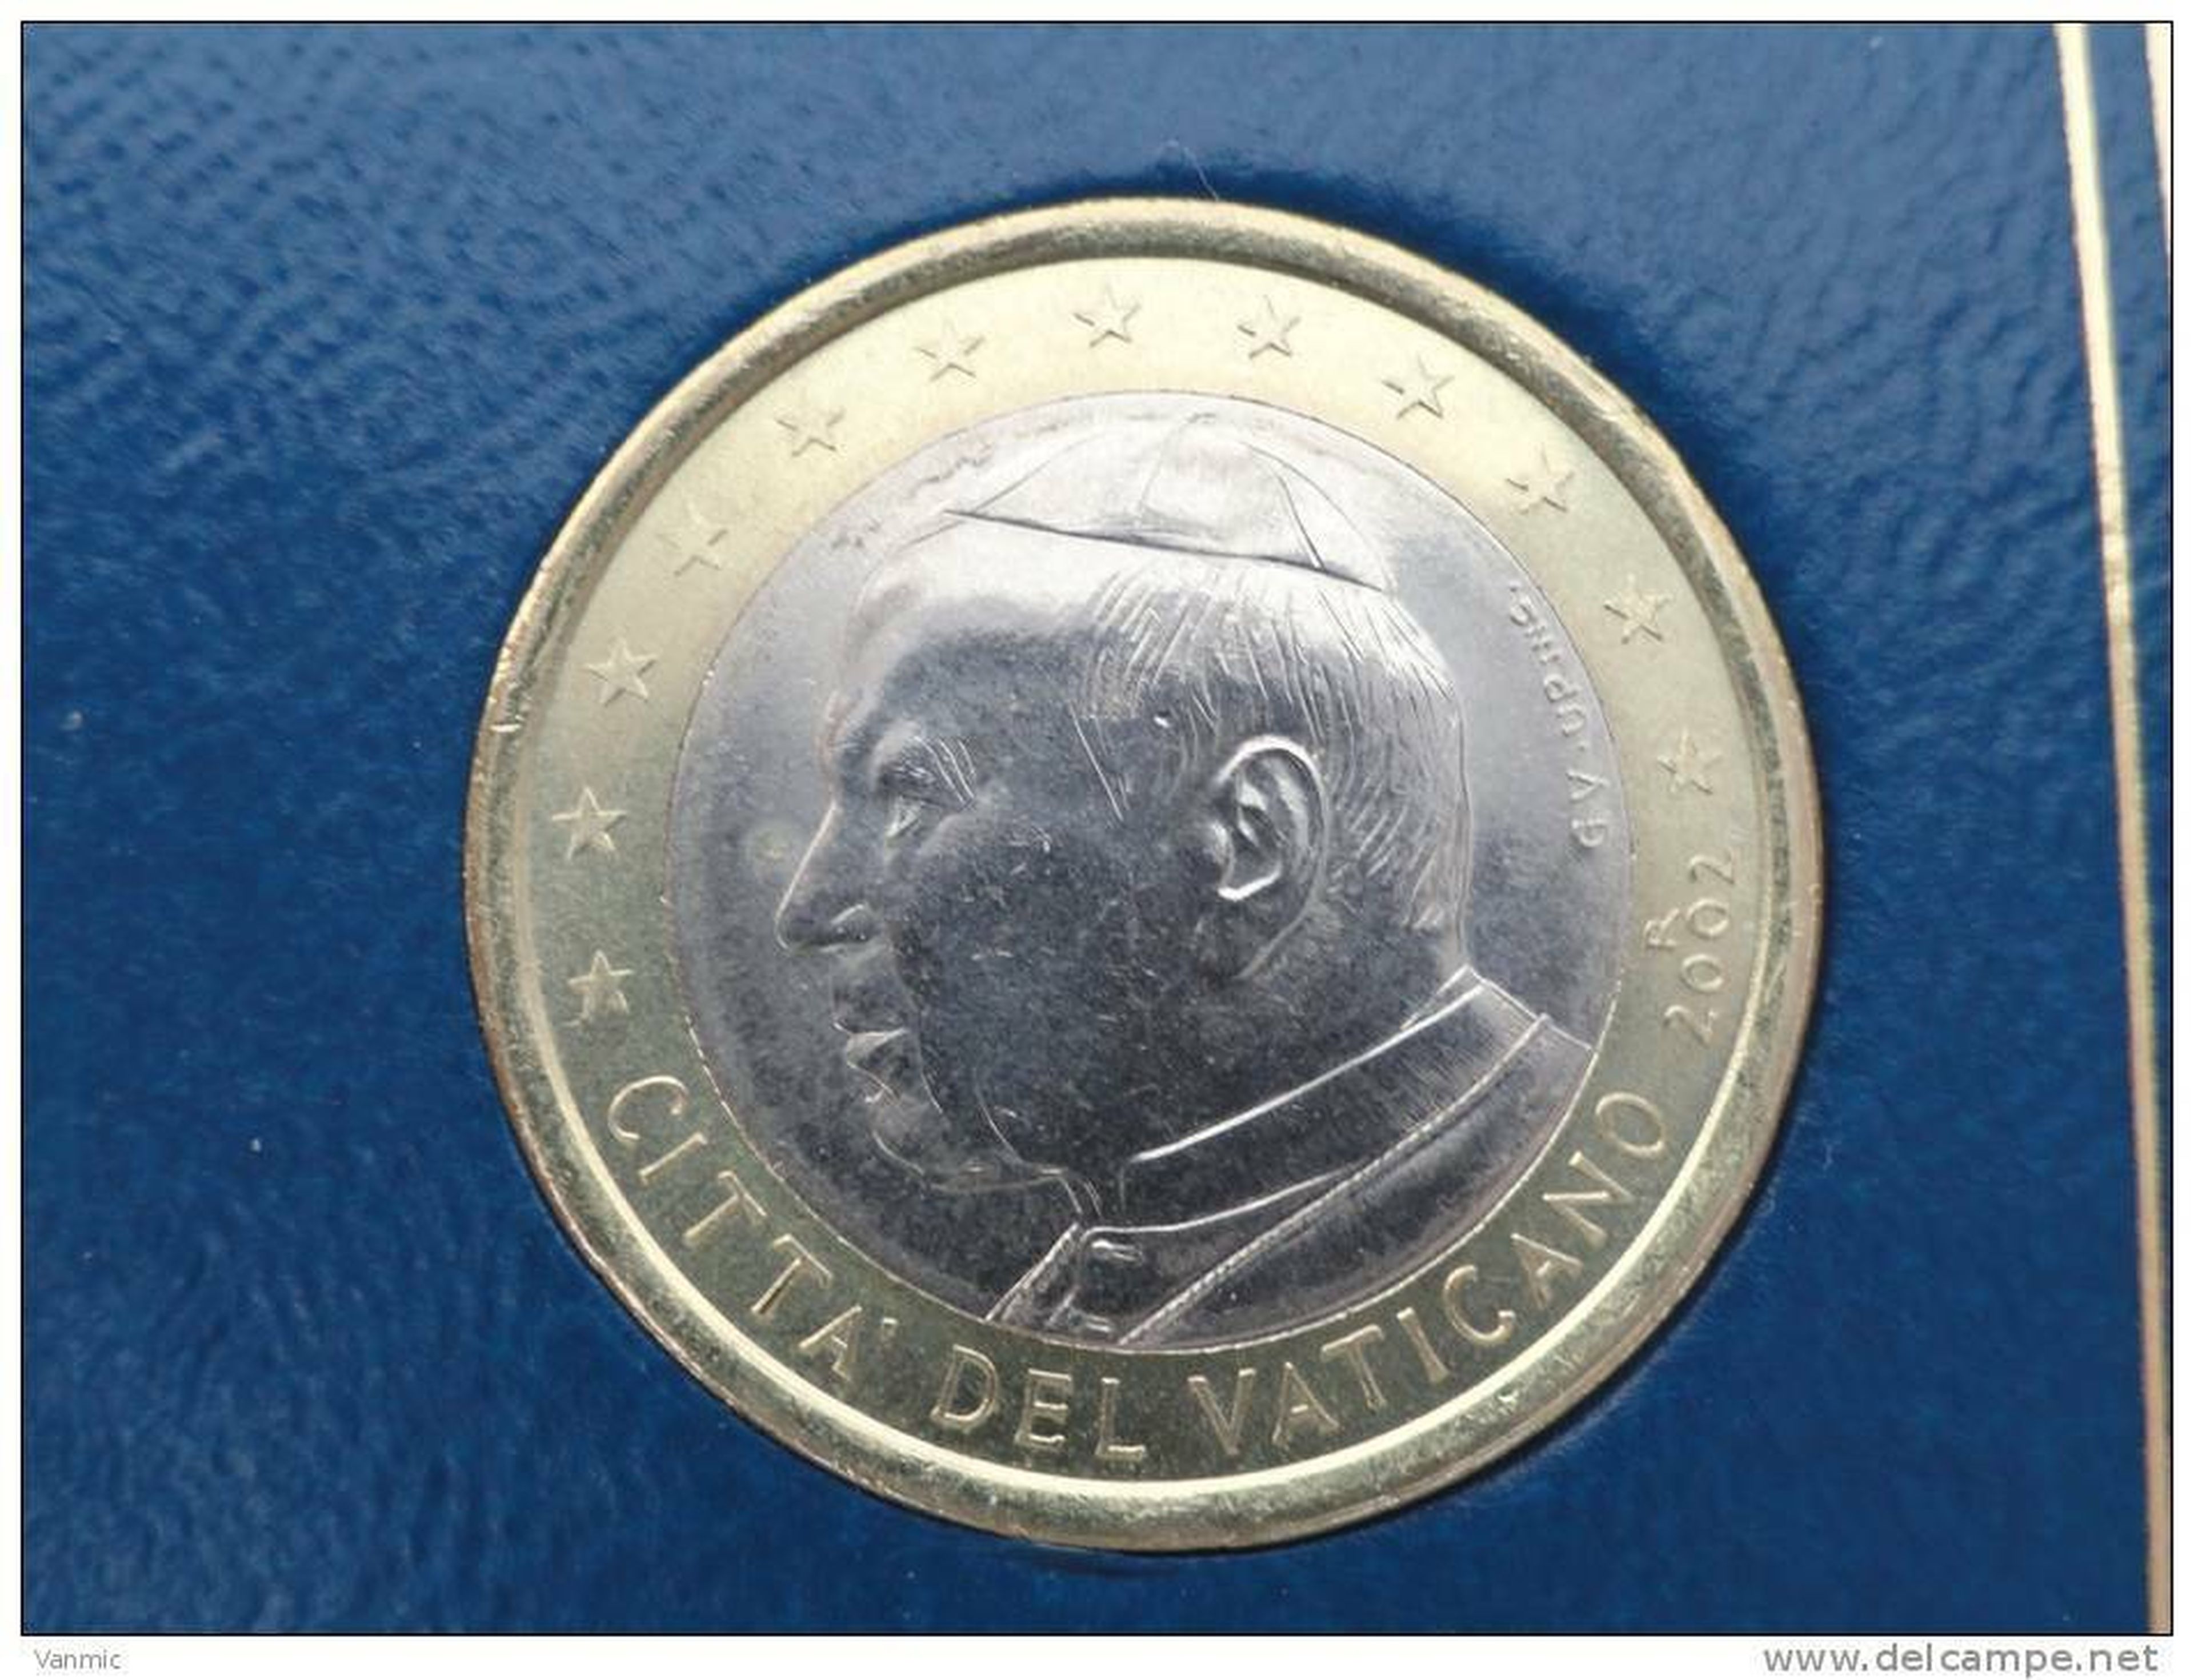 1 euro del Vaticano 2002